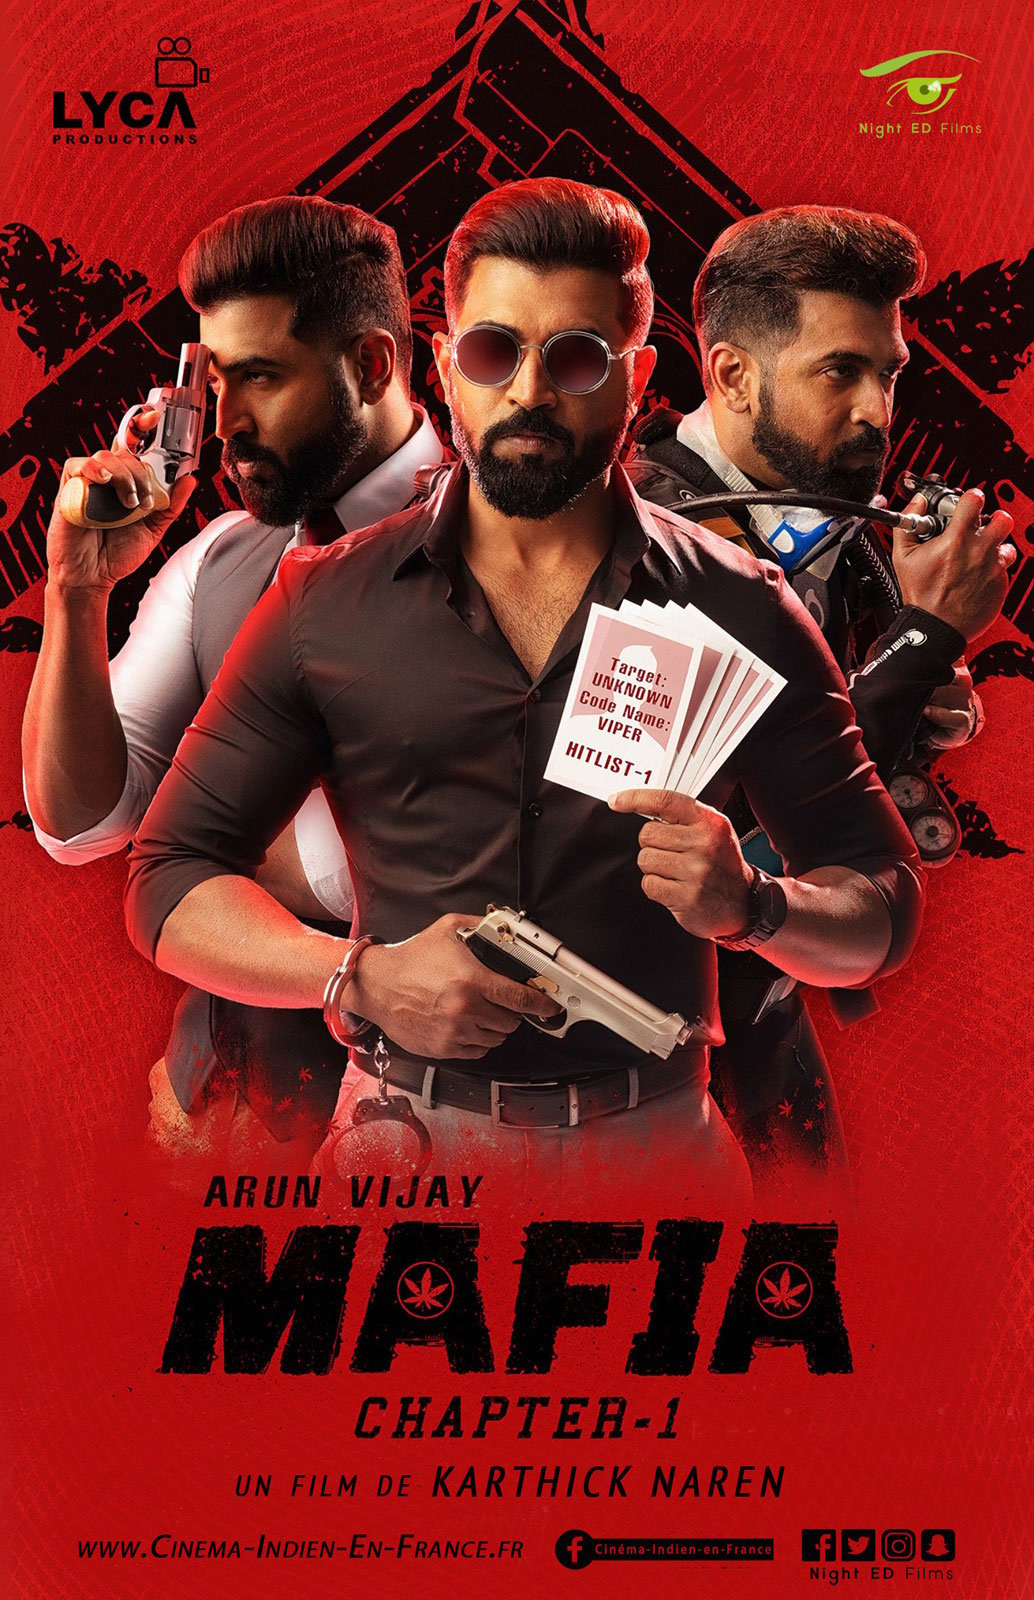 Mafia: Street Fight for apple download